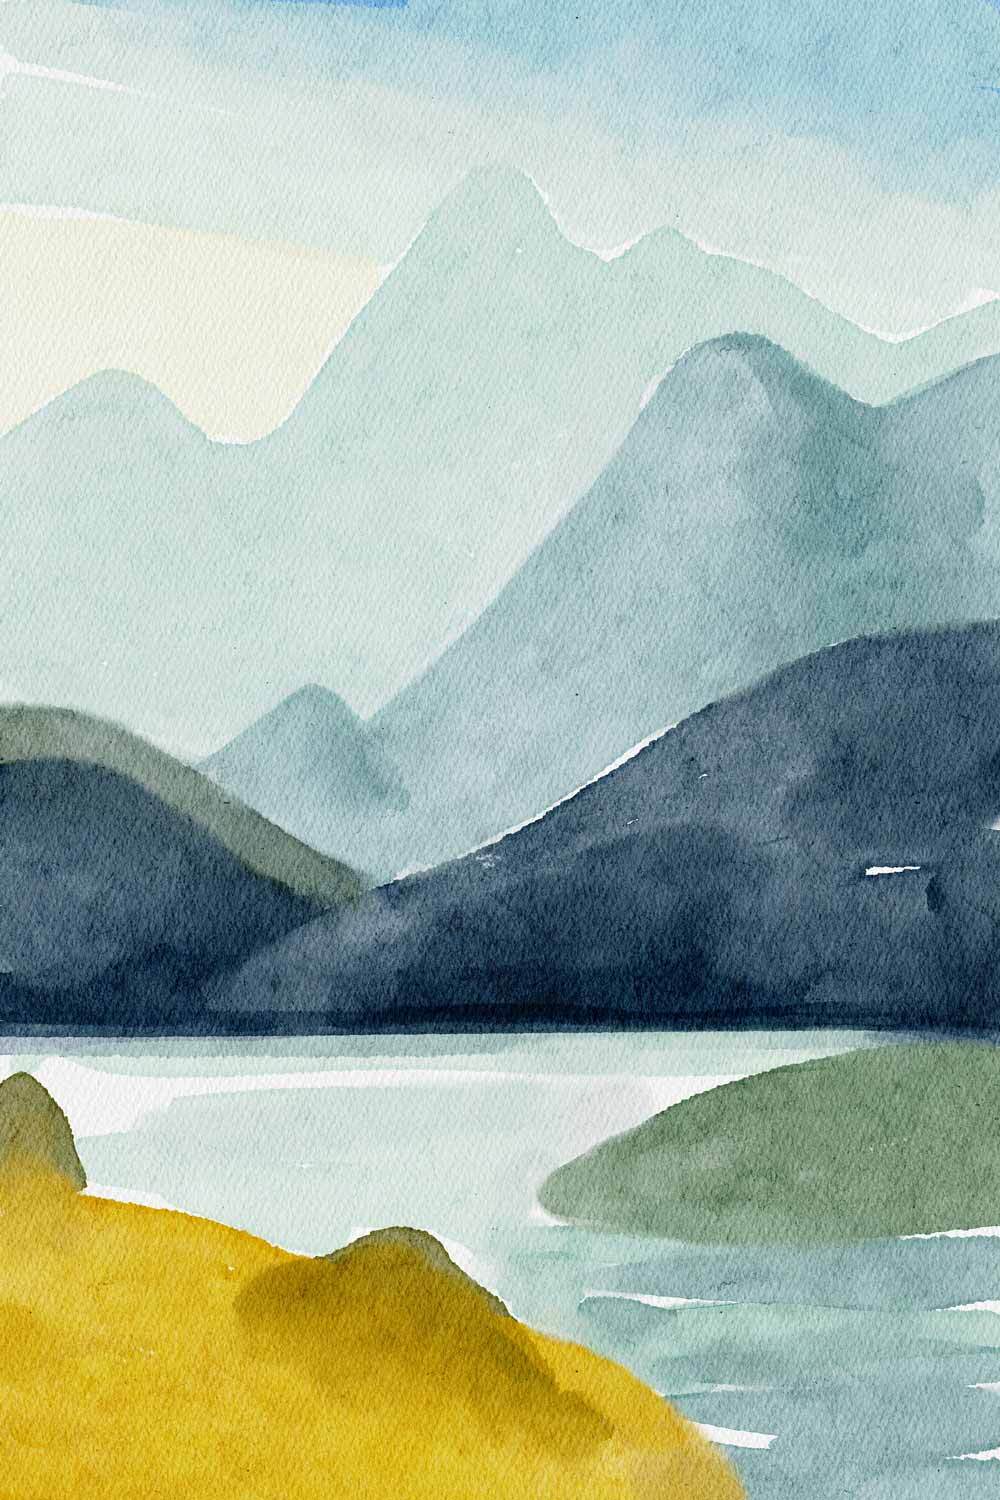 Natural landscape, Sky, Mountain, Ecoregion, Slope, Water, Paint, Highland, Painting, Art